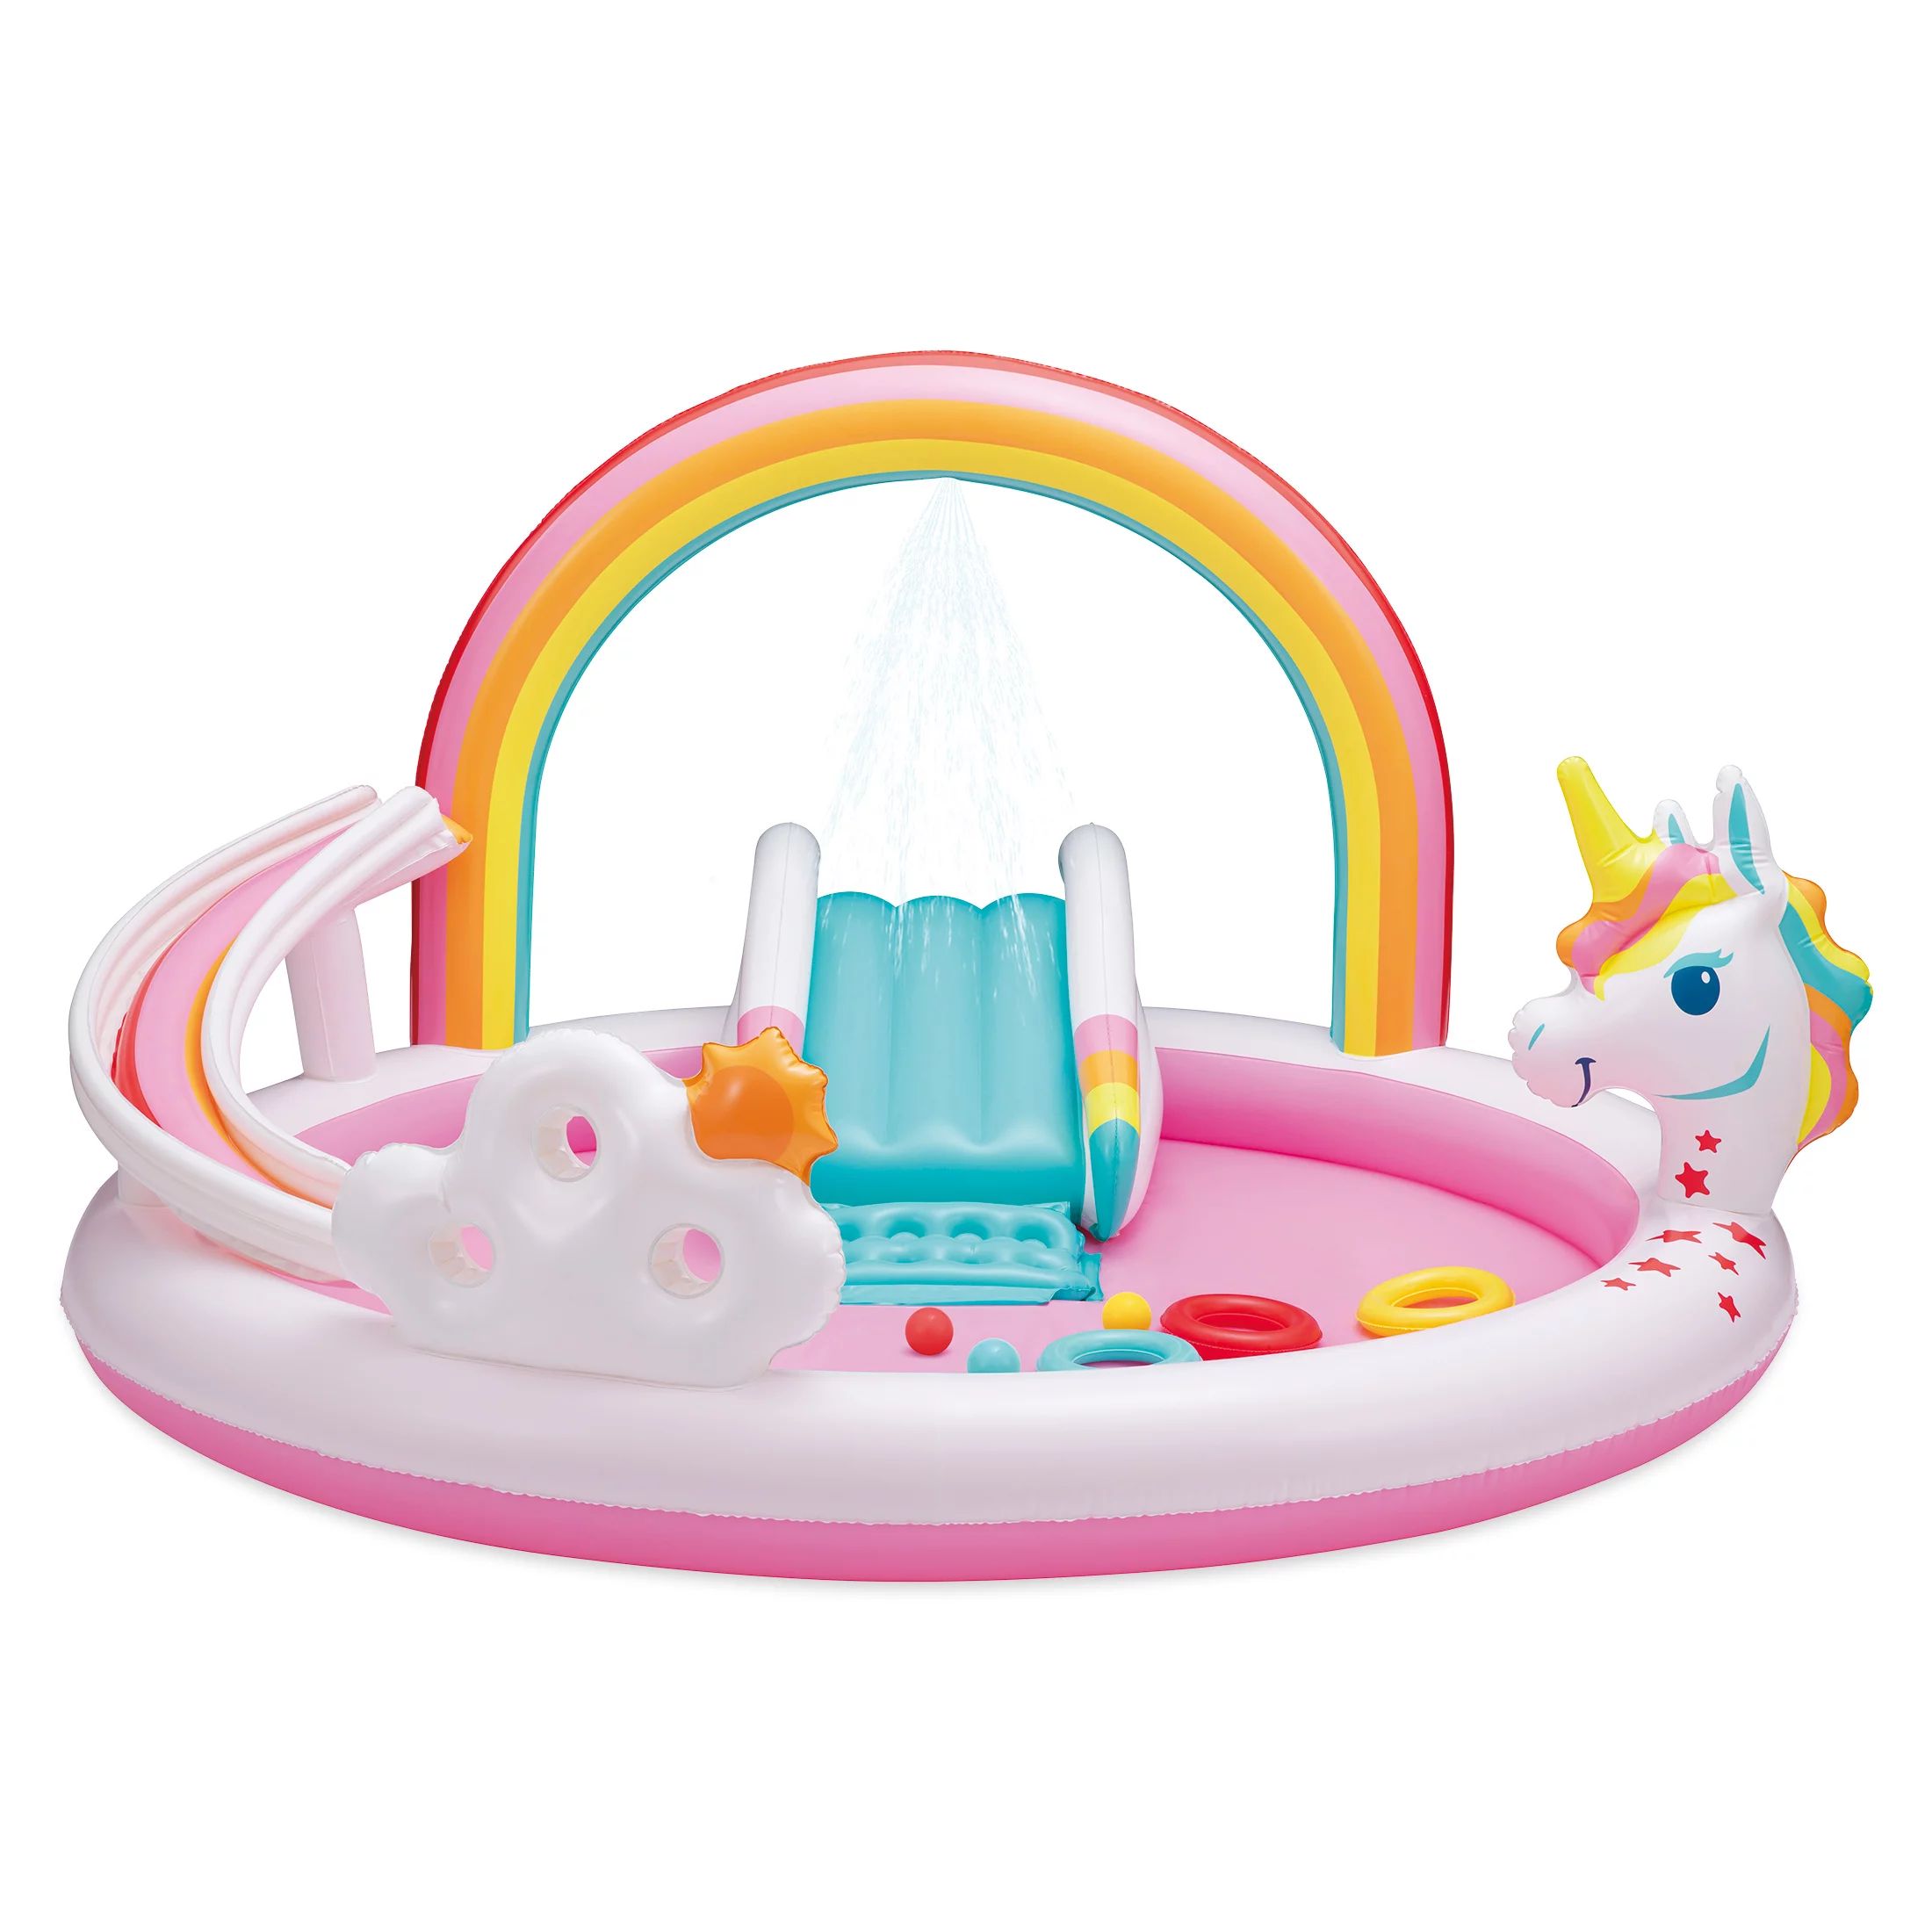 Bluescape Rainbow Unicorn Inflatable Play Center, Kids Splash Pool with Sprinkler, Toys & Slide, ... | Walmart (US)